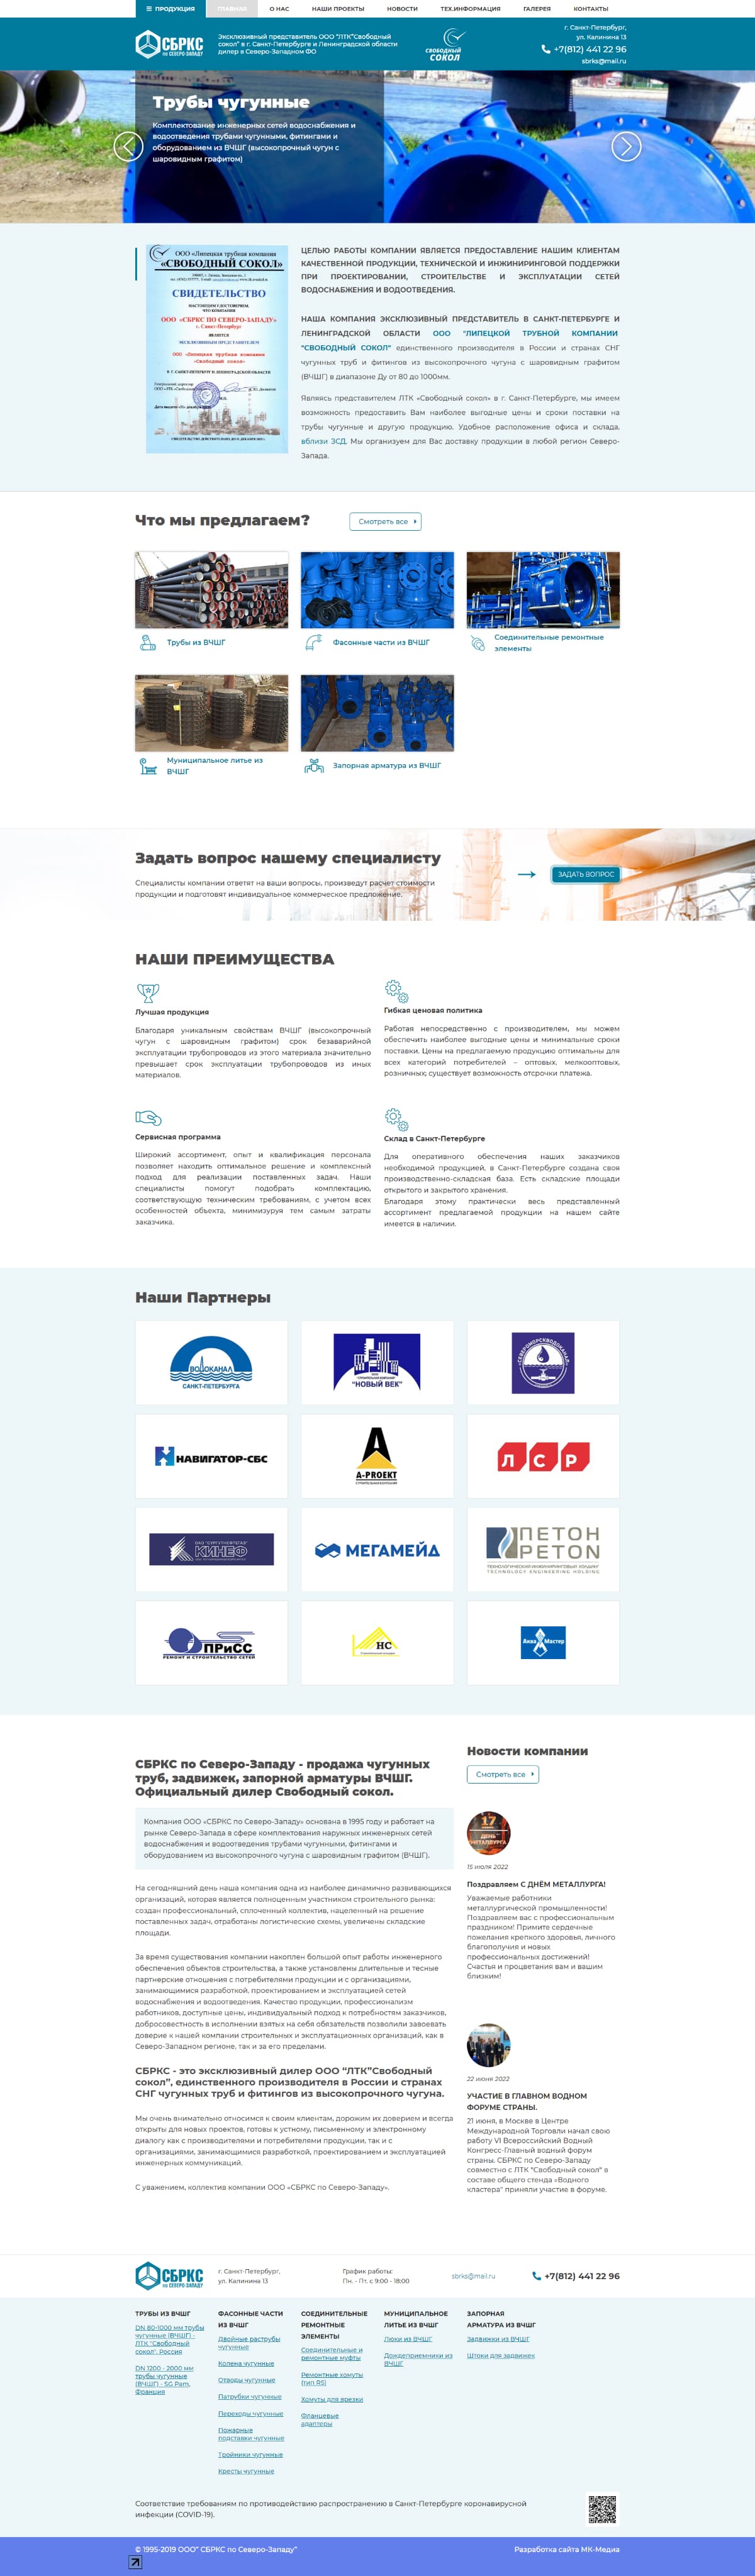 Создание корпоративного сайта для СБРКС